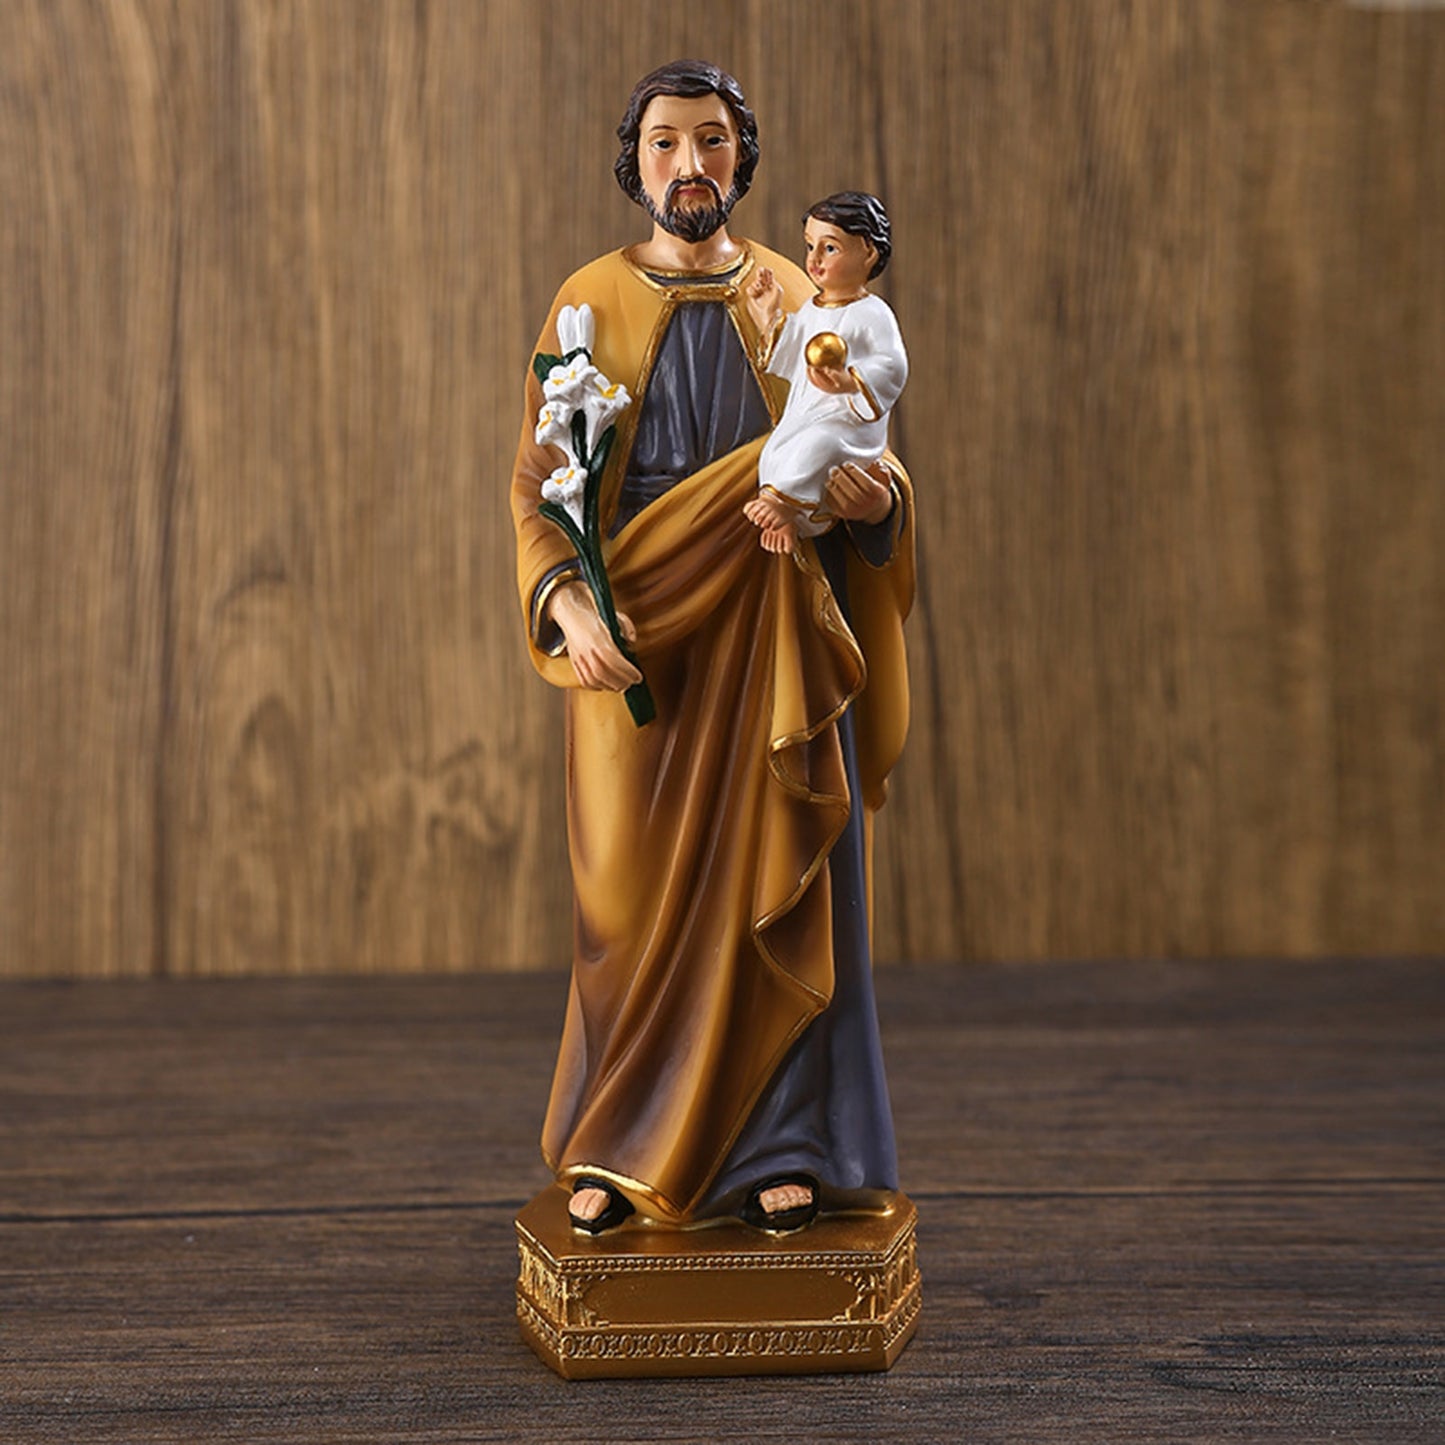 Escultura de San Jose Tabletop Decoration Resin St Joseph with Child Jesus Figure Colored Religious Statue Estatua